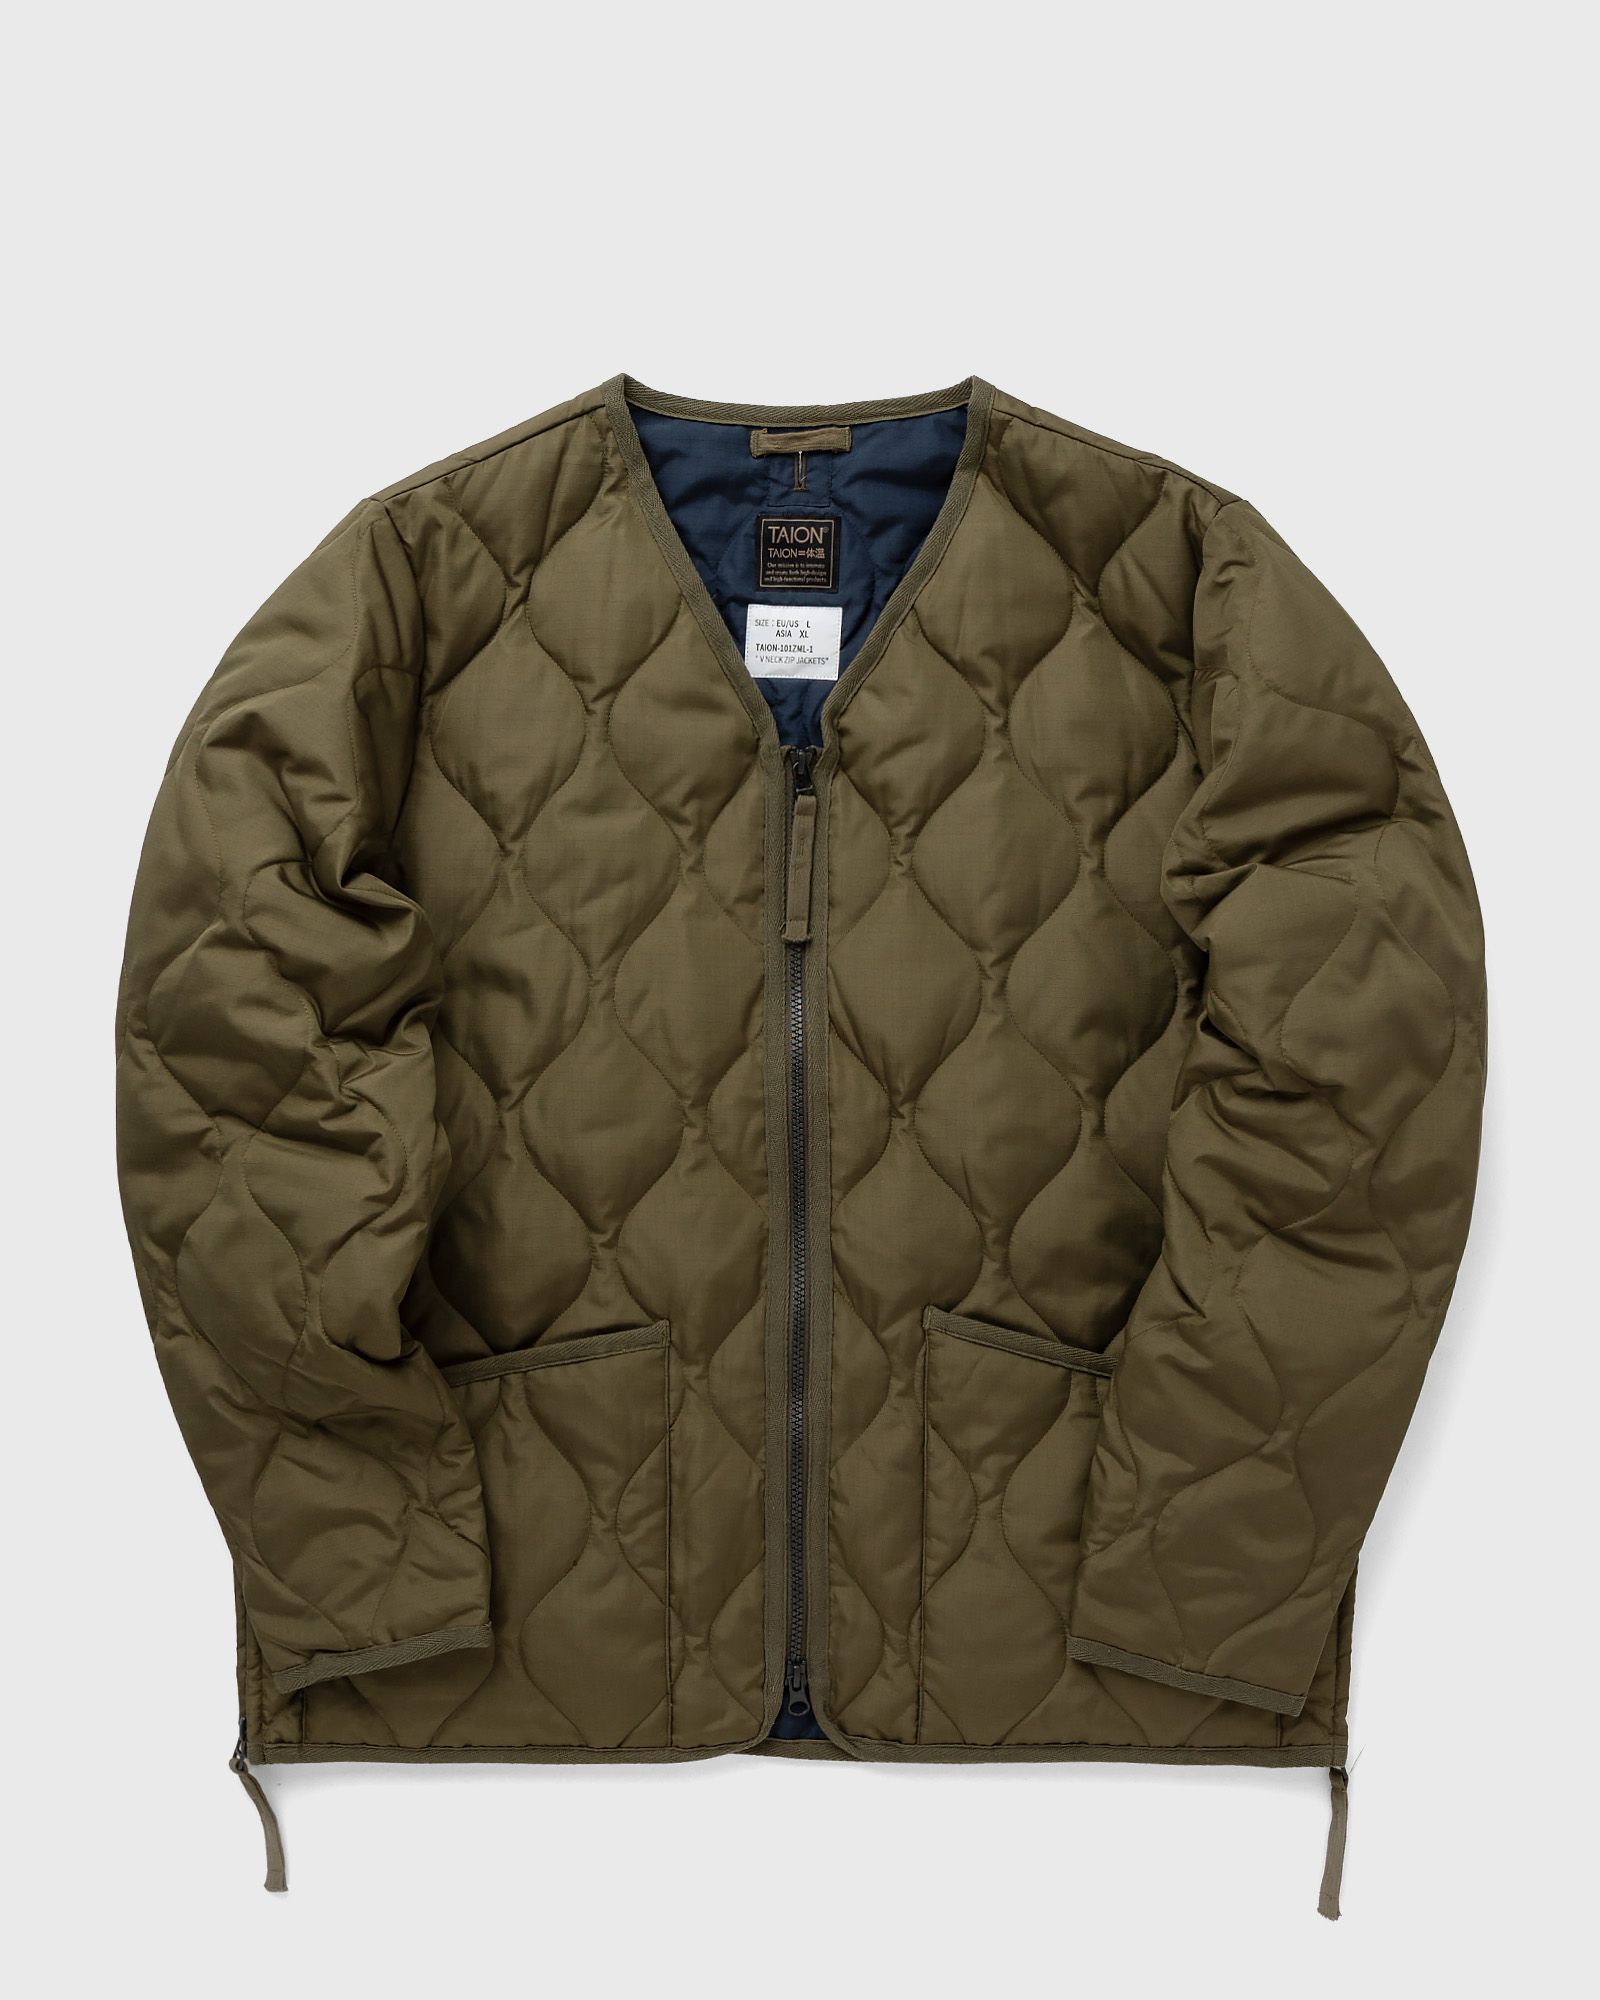 Taion - military zip v-neck jacket men windbreaker green in größe:xl